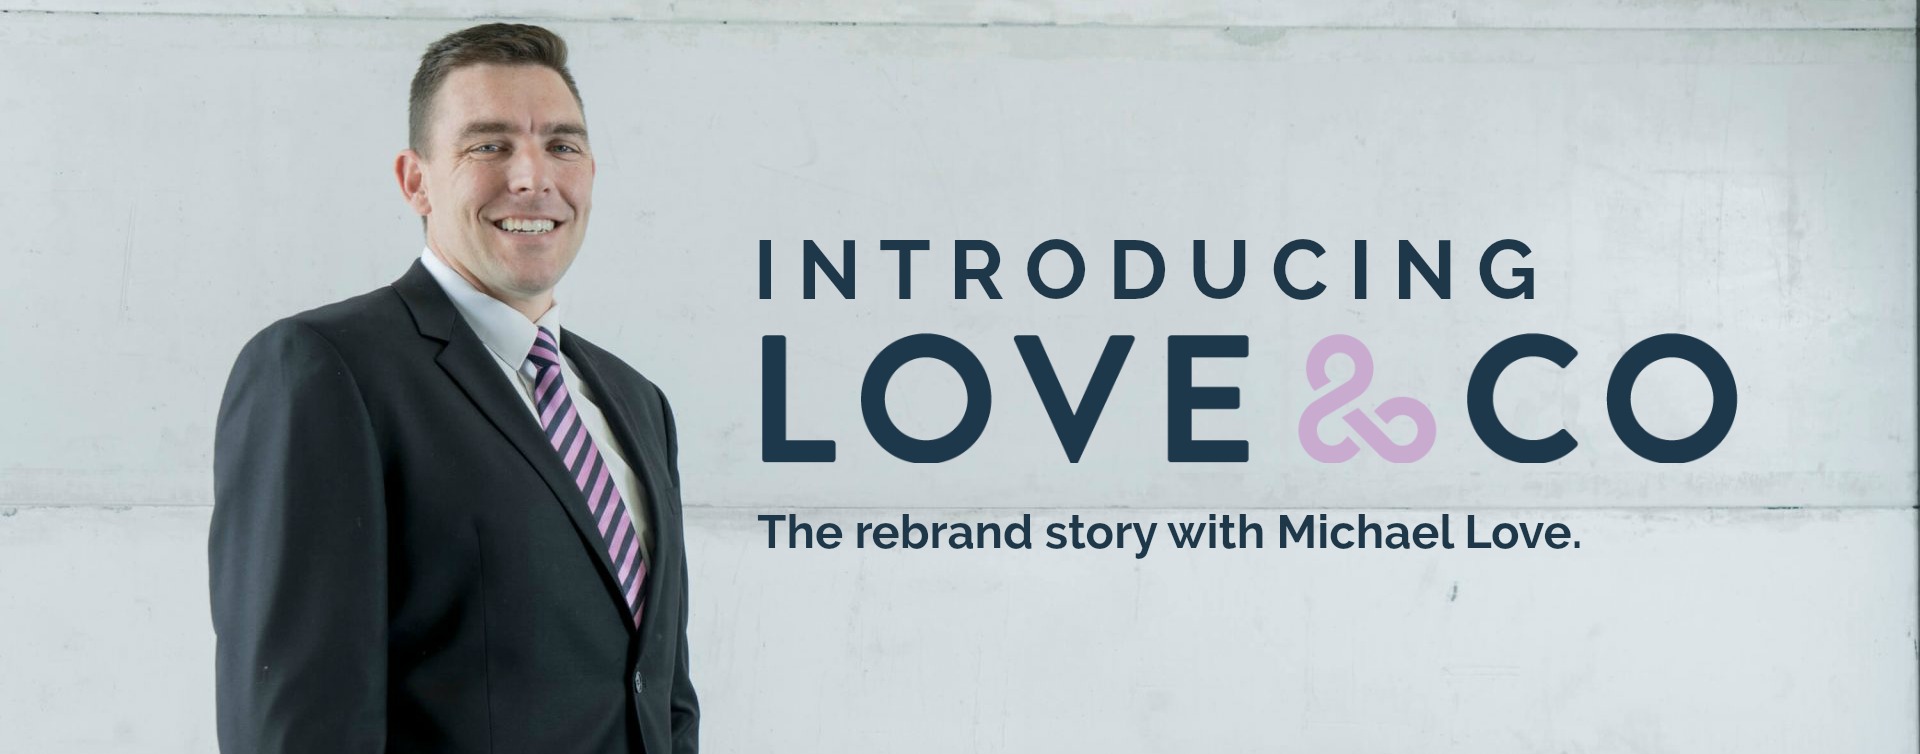 Michael Love on Love&Co's Rebrand